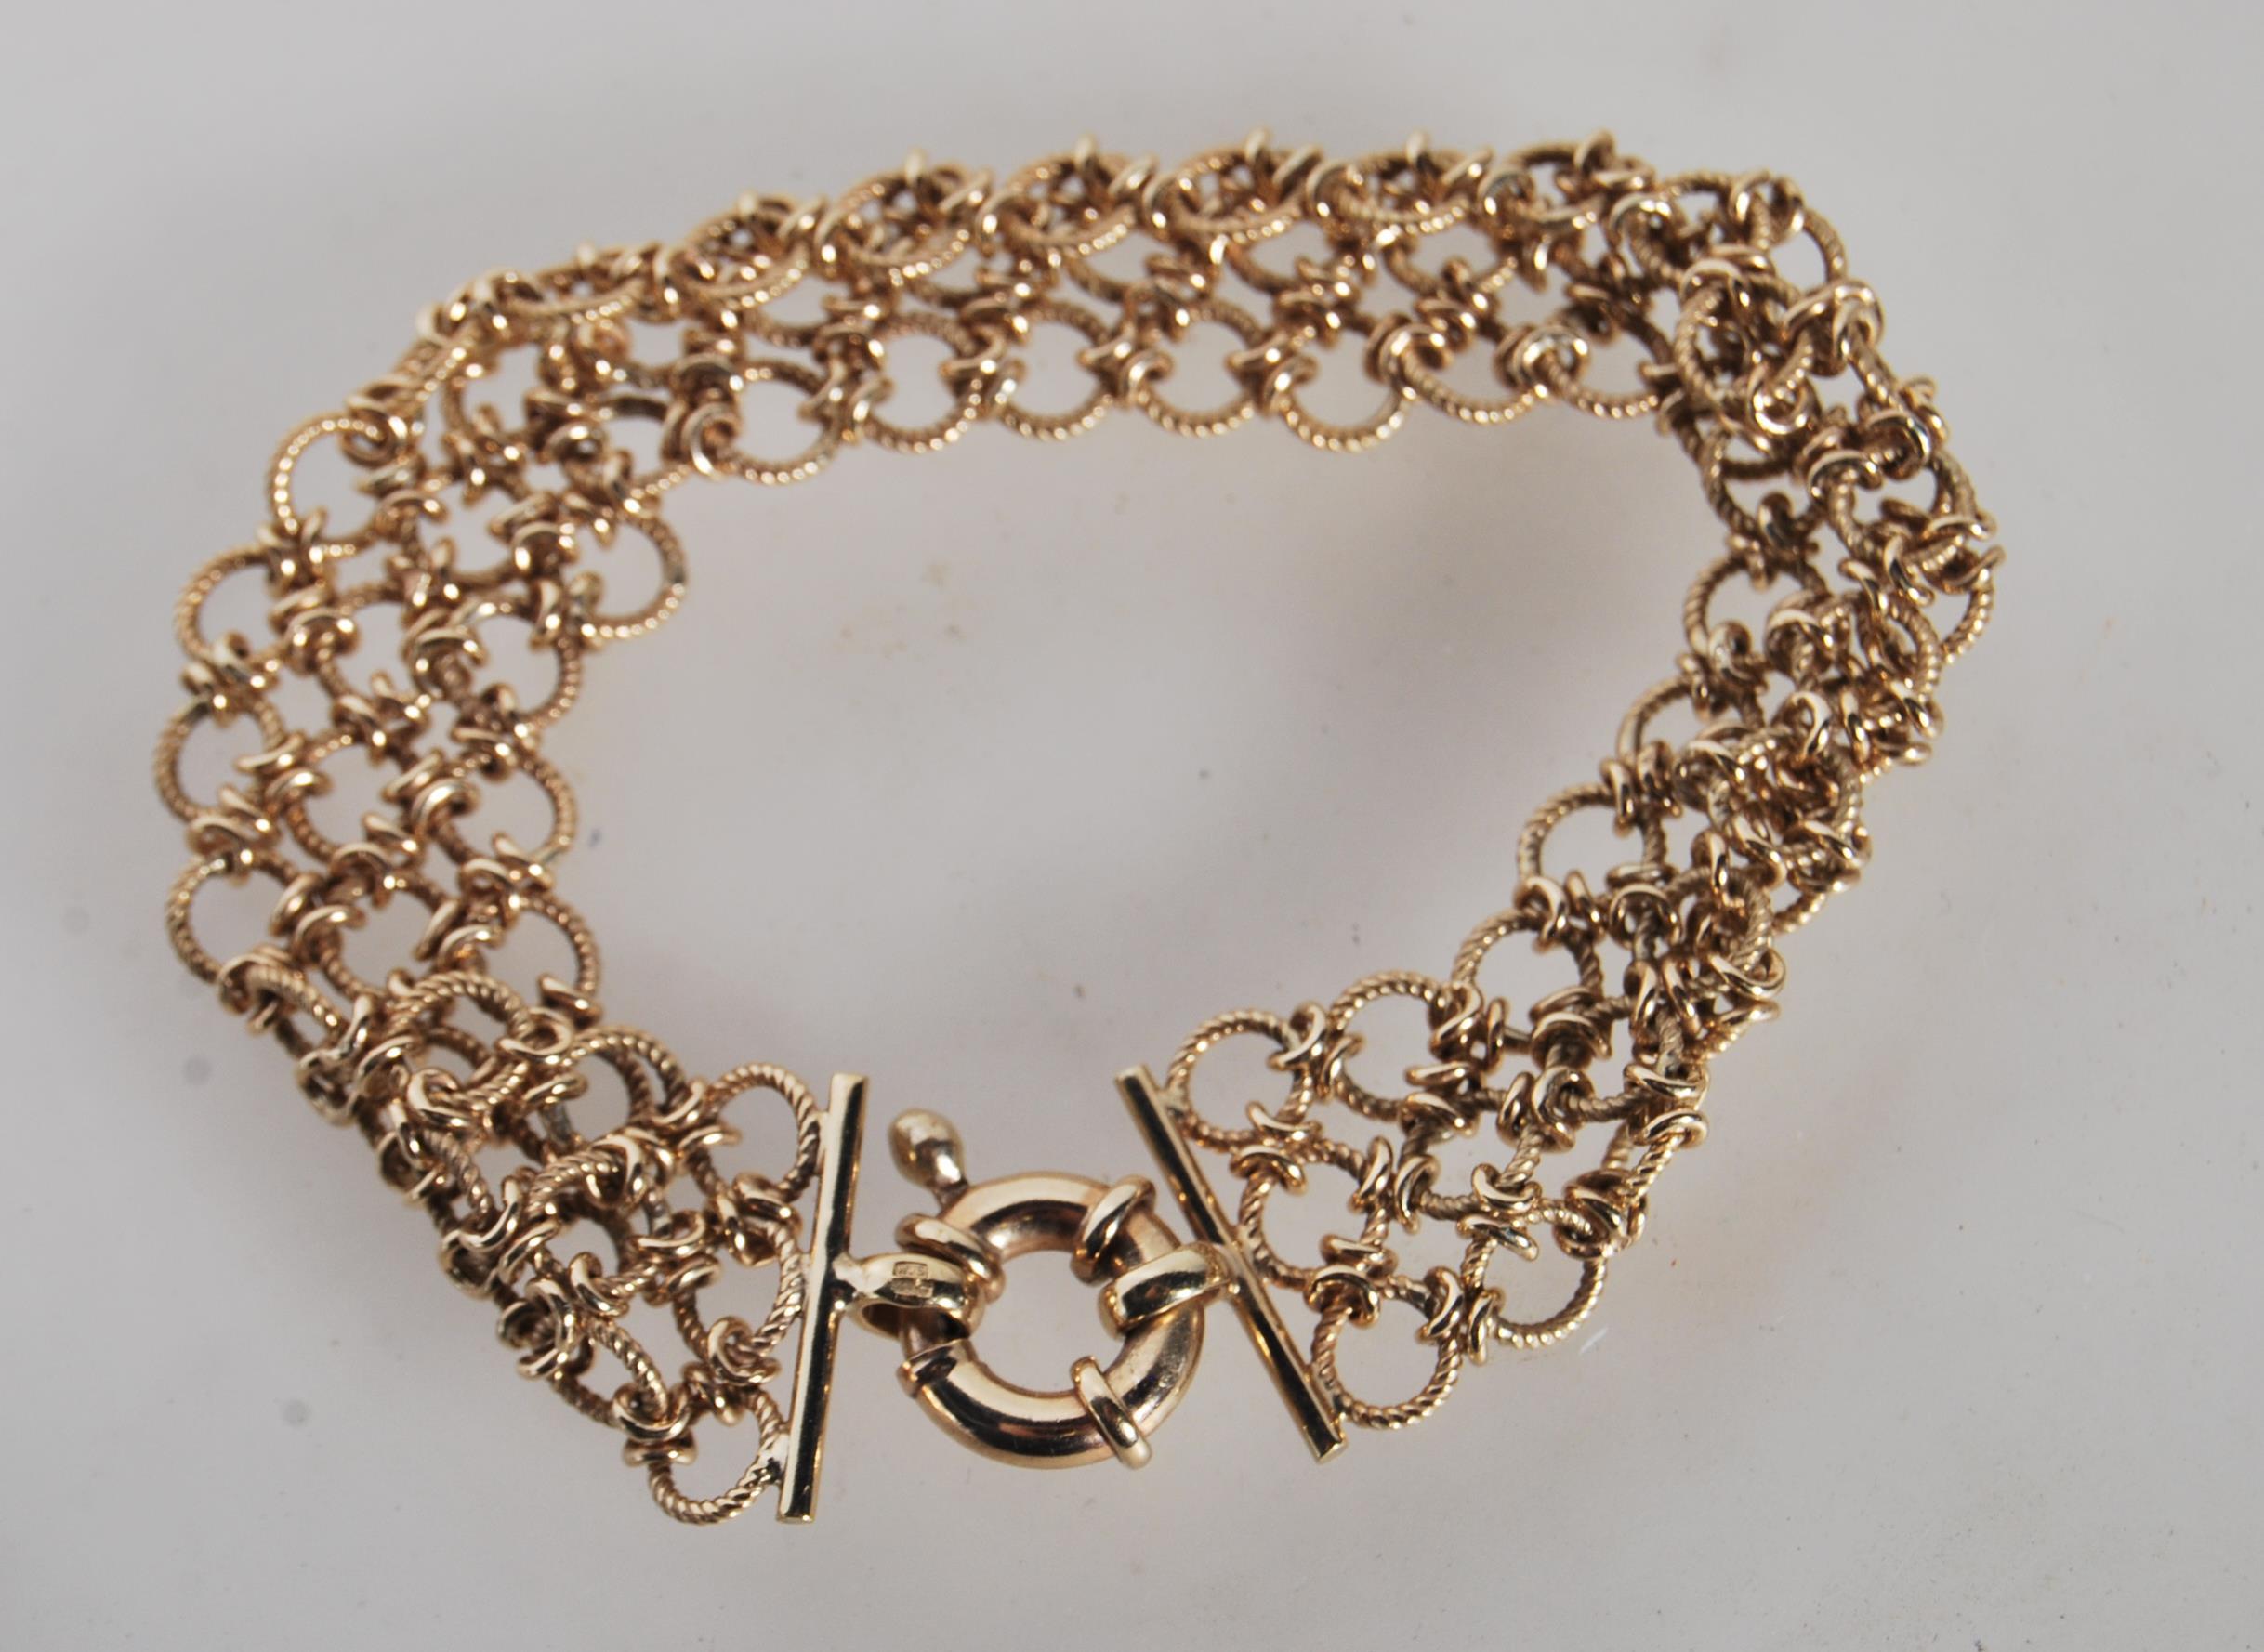 A hallmarked 9ct gold ladies three strand bracelet chain having three rows of rope twist hopps - Image 4 of 5